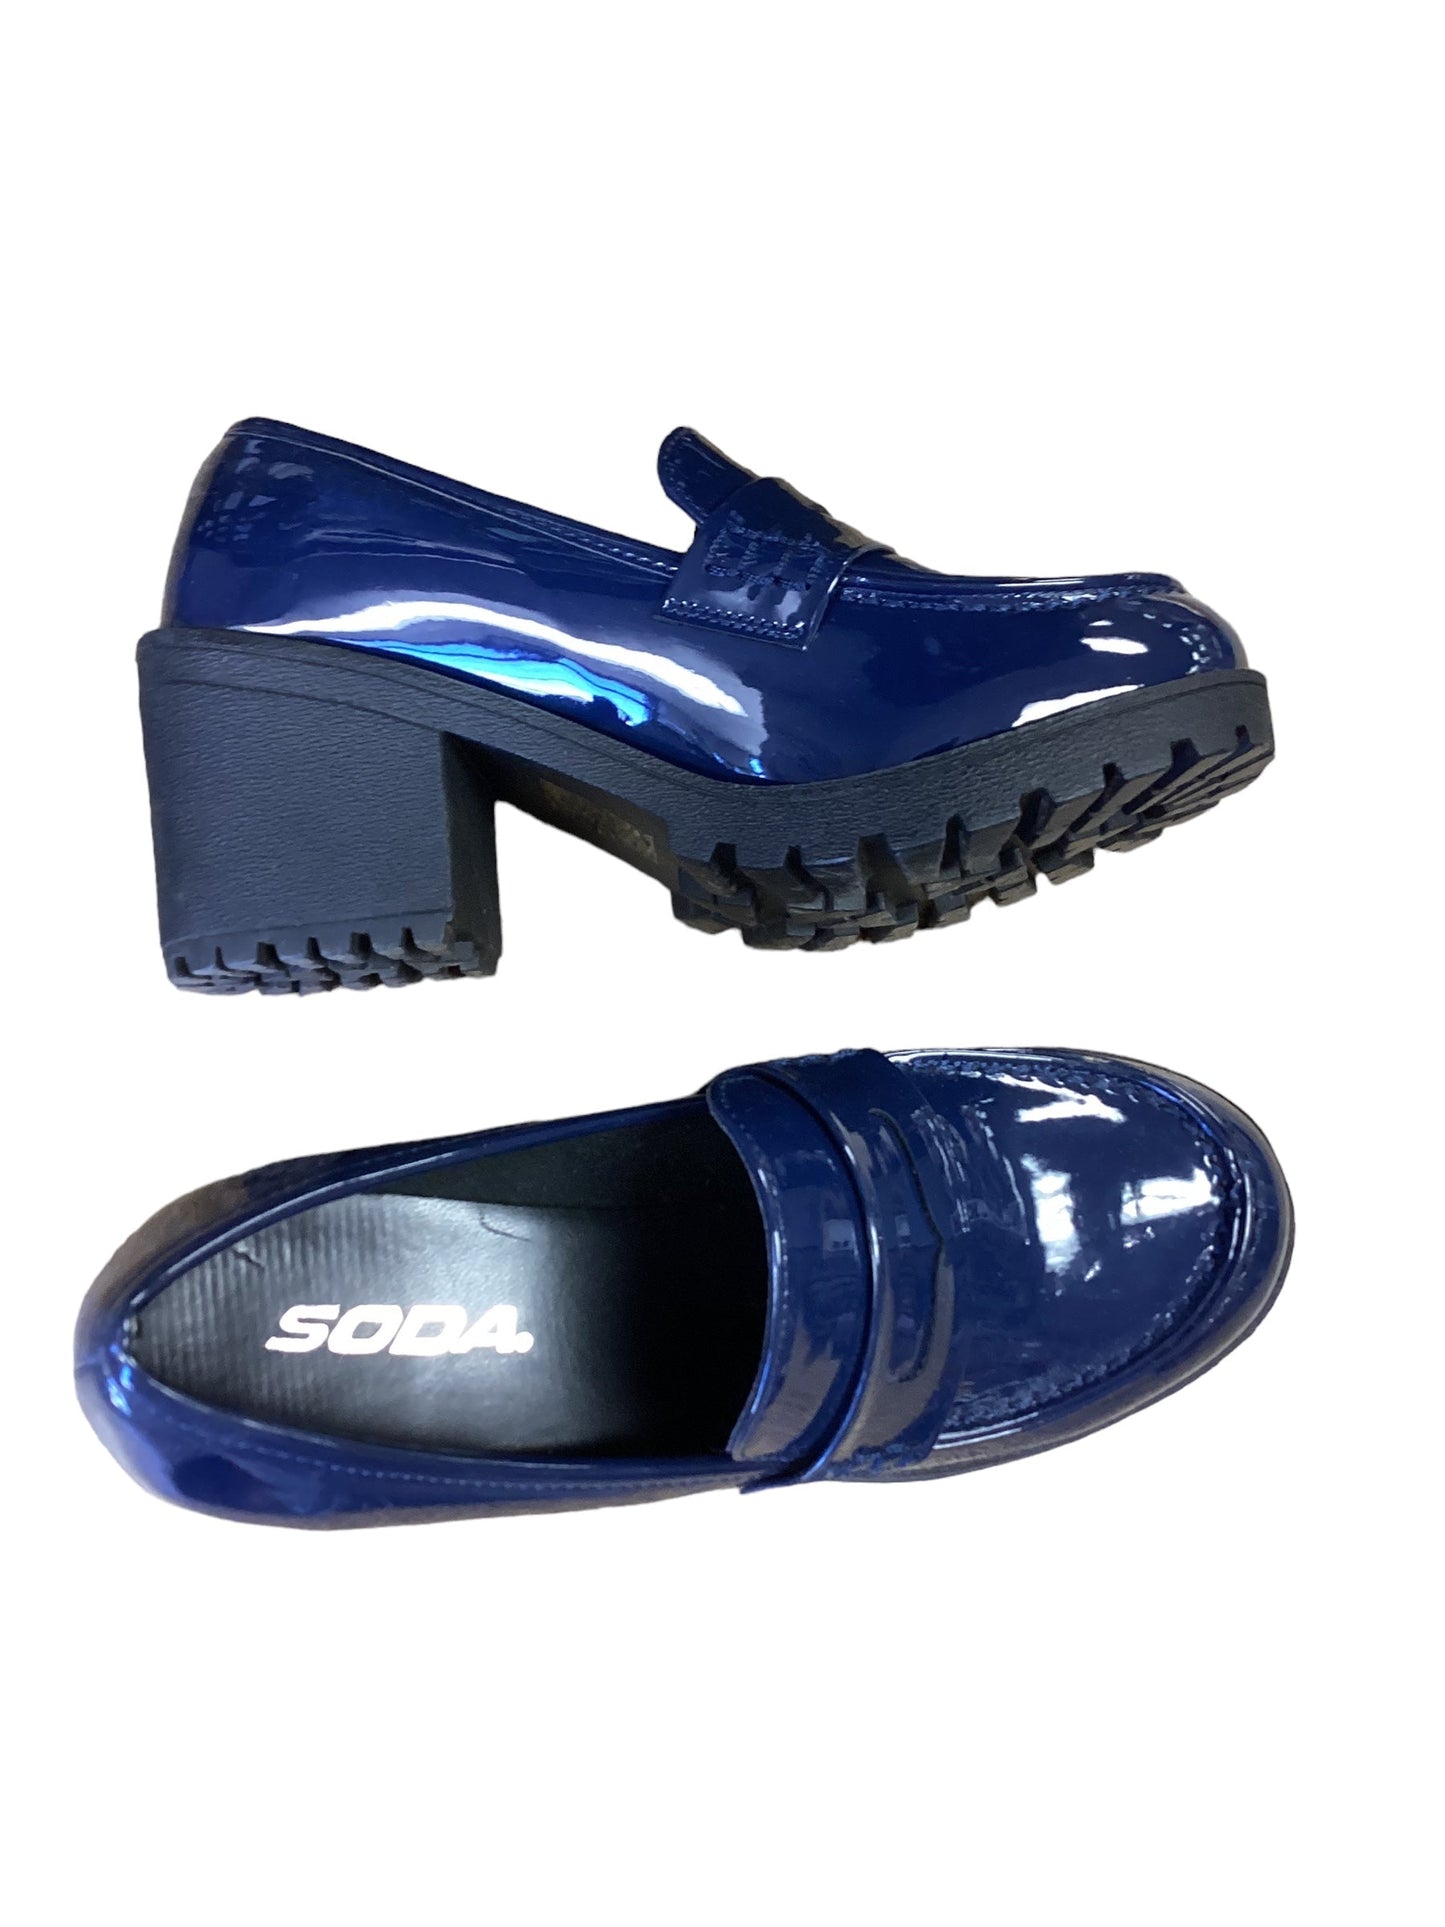 Navy Shoes Heels Block Soda, Size 6